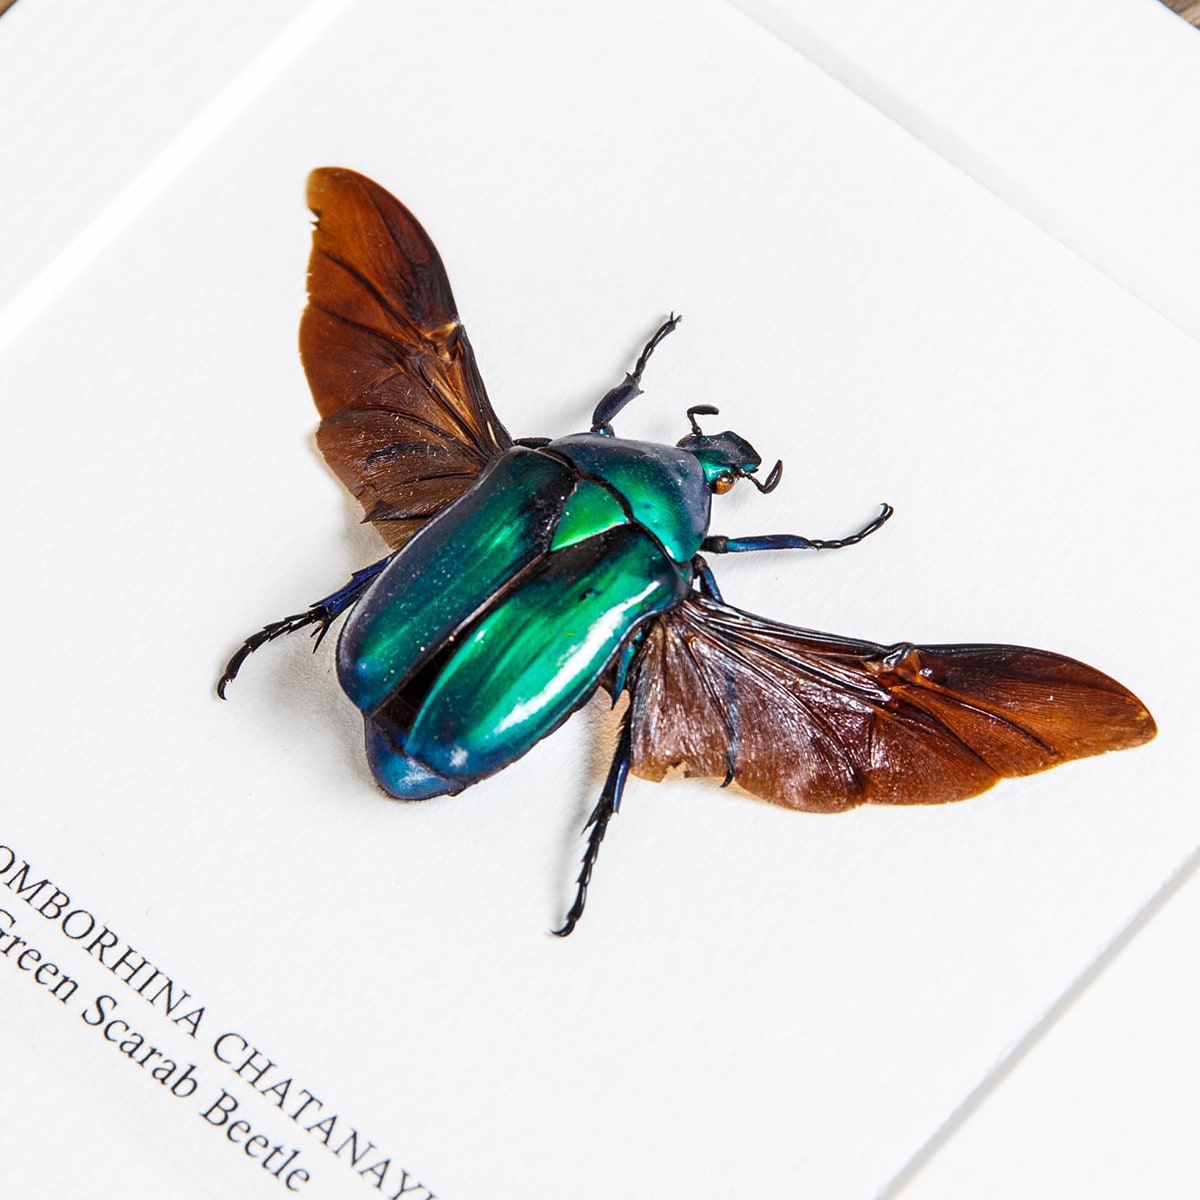 Green Scarab Beetle In Box Frame (Rhomborhina chatanayi)